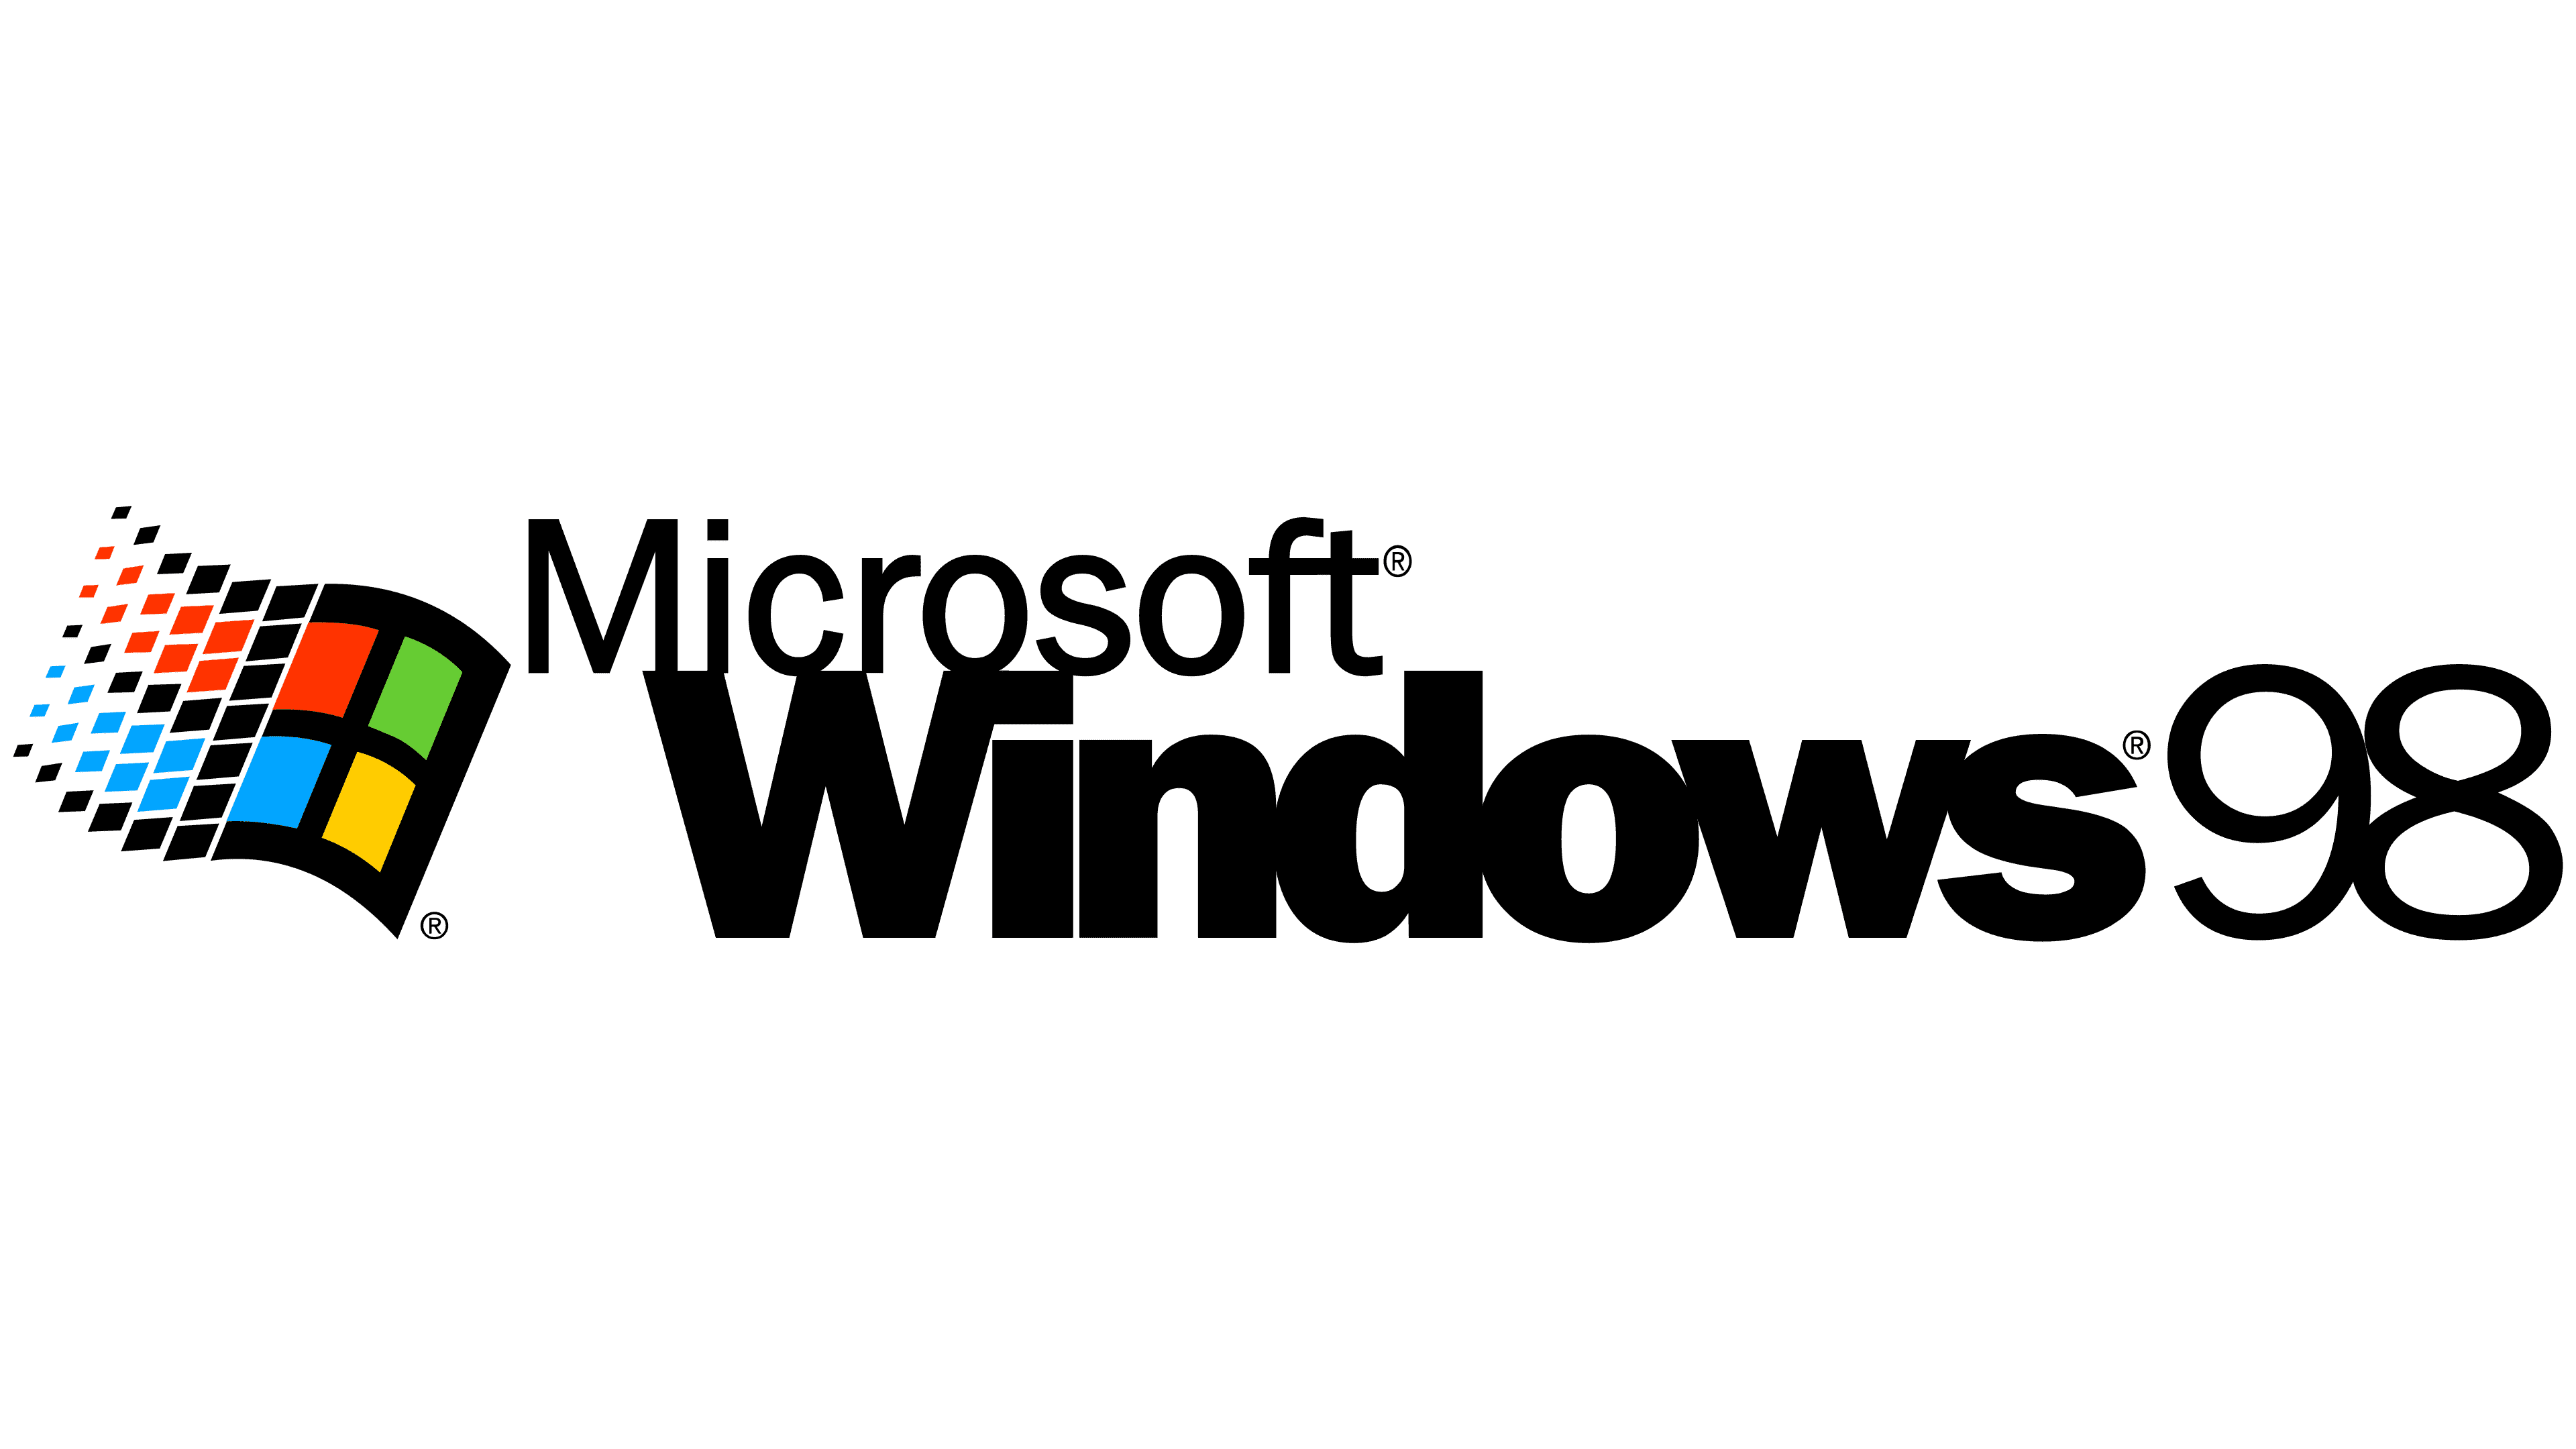 Microsoft Windows Logo PNG Transparent & SVG Vector - Freebie Supply